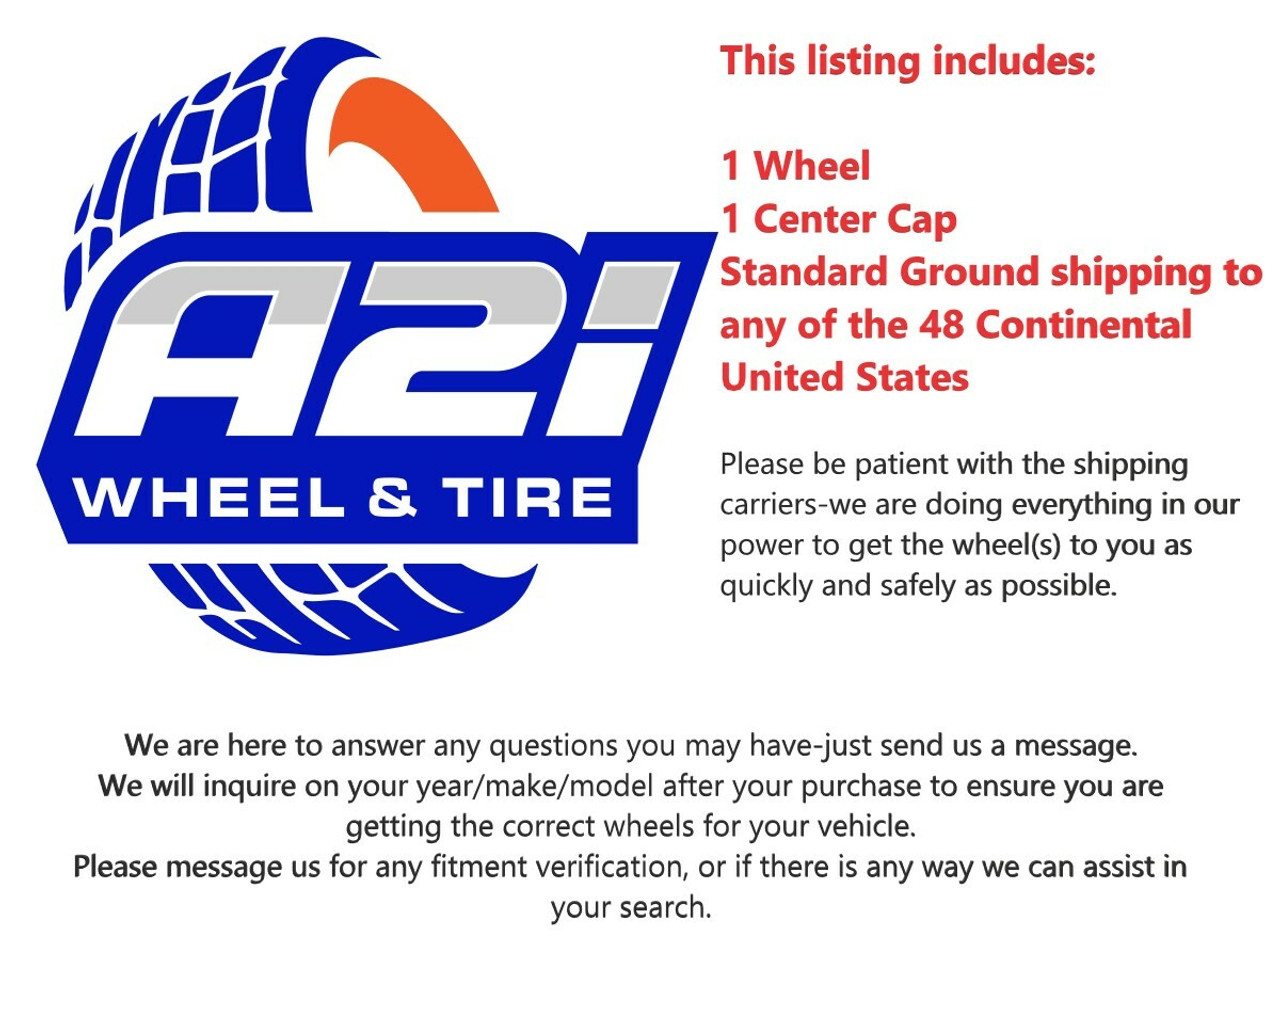 24" Axe Wheels Sembrado Fully Polished 24x9 Wheel 5x120 25mm Rim